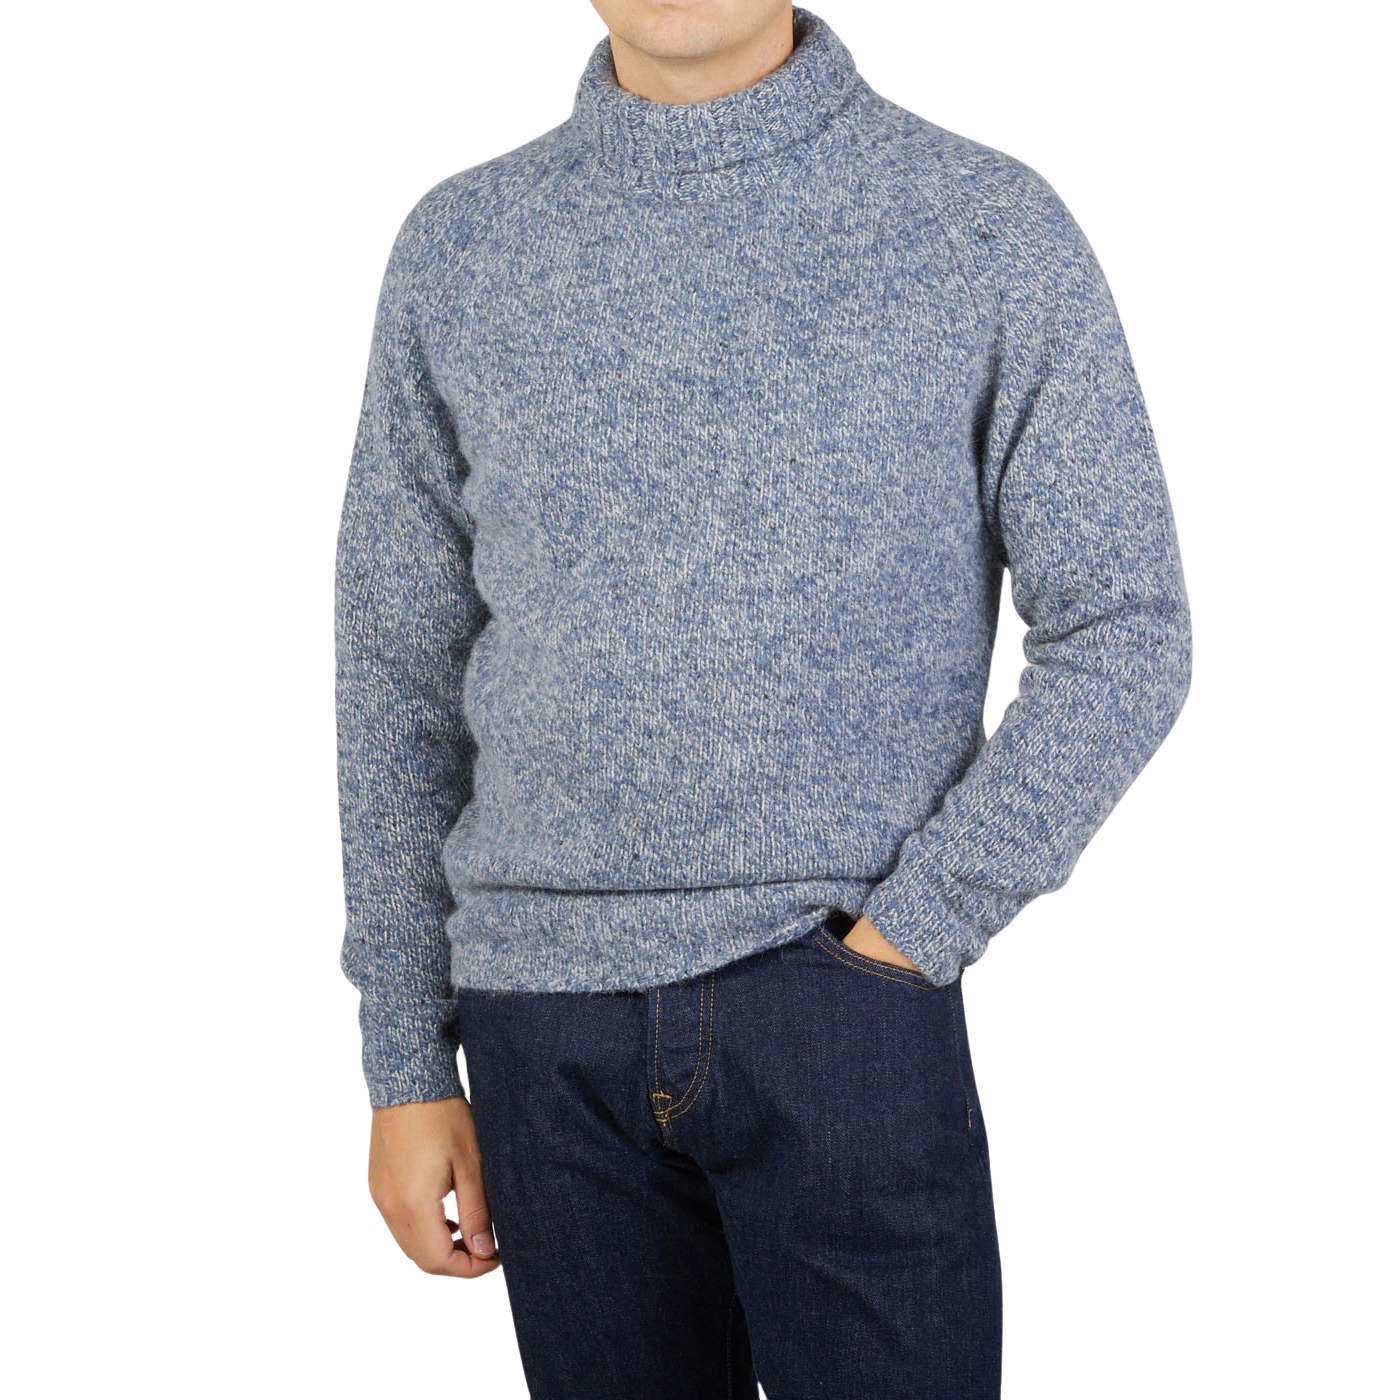 A man wearing an Alan Paine regular fit Spreckle Wool Alpaca Tweed Roll Neck sweater.